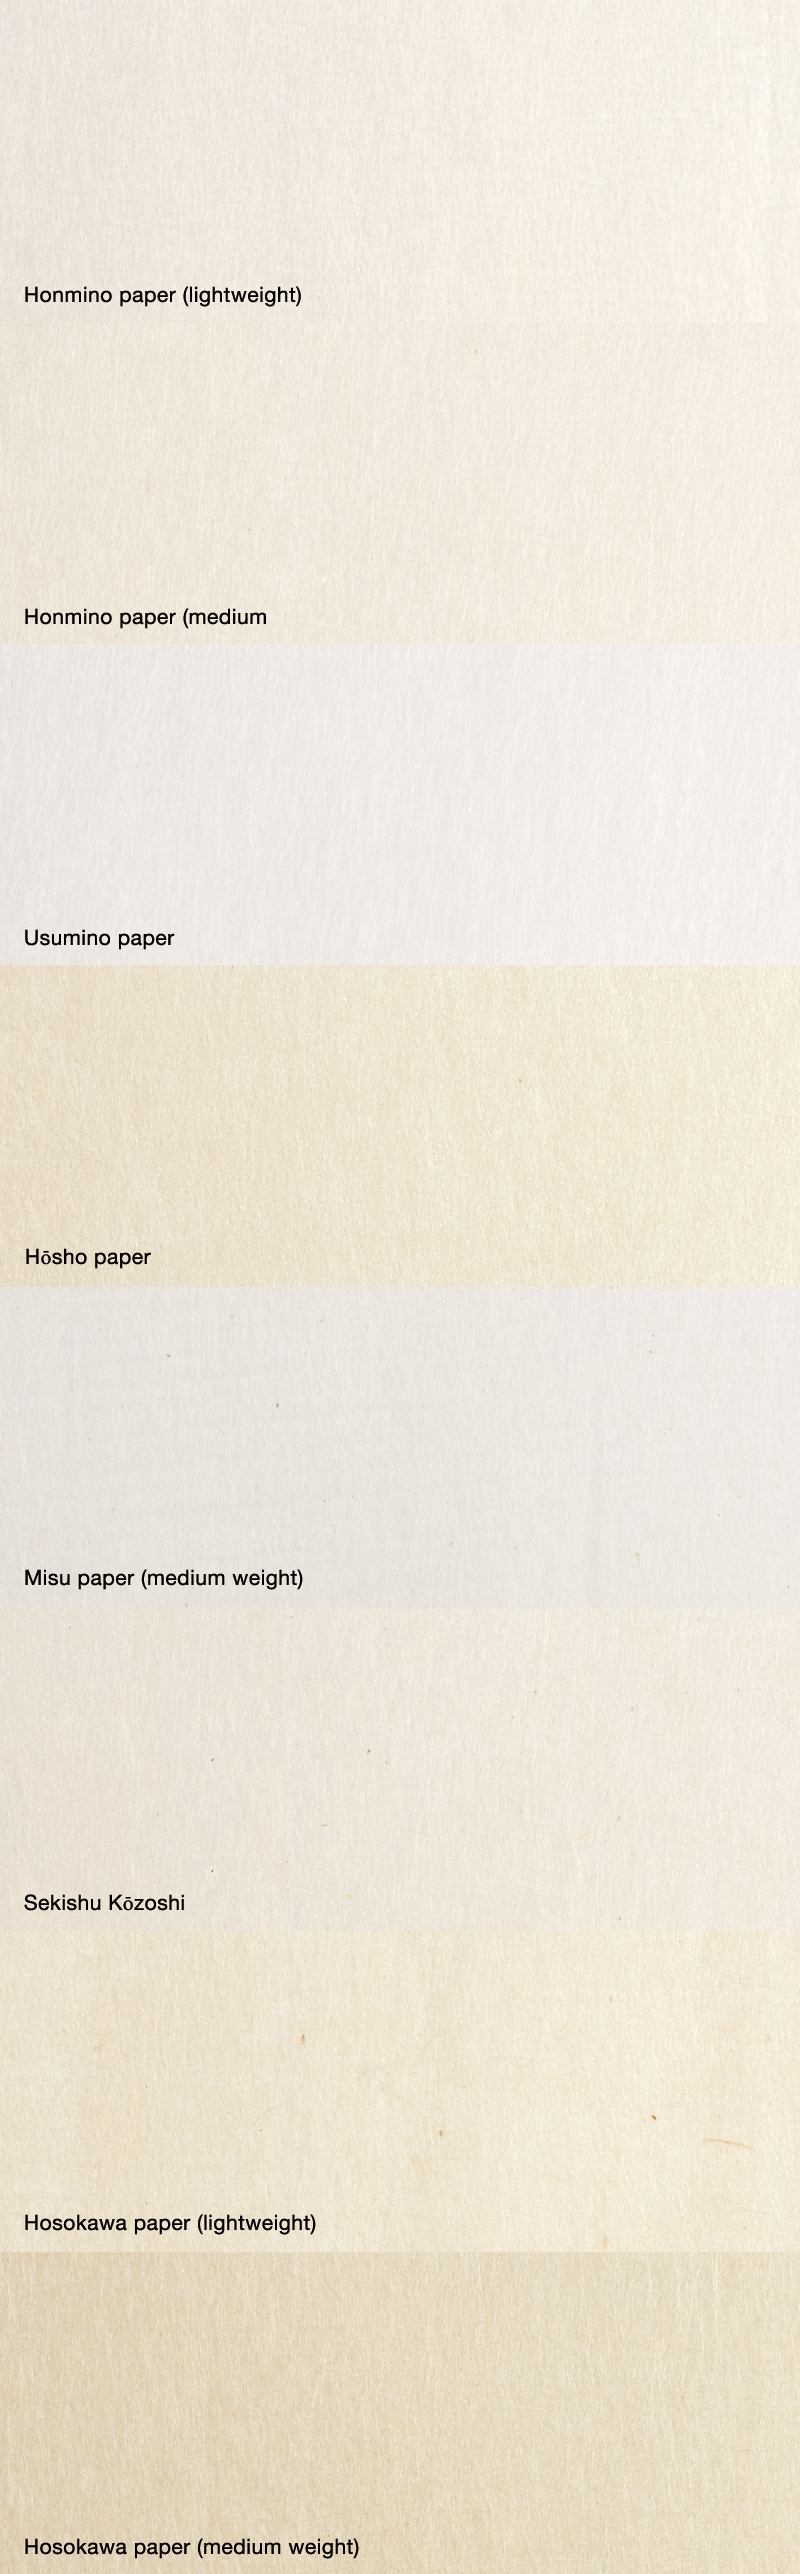 Japanese Mulberry Paper - Takach Paper International